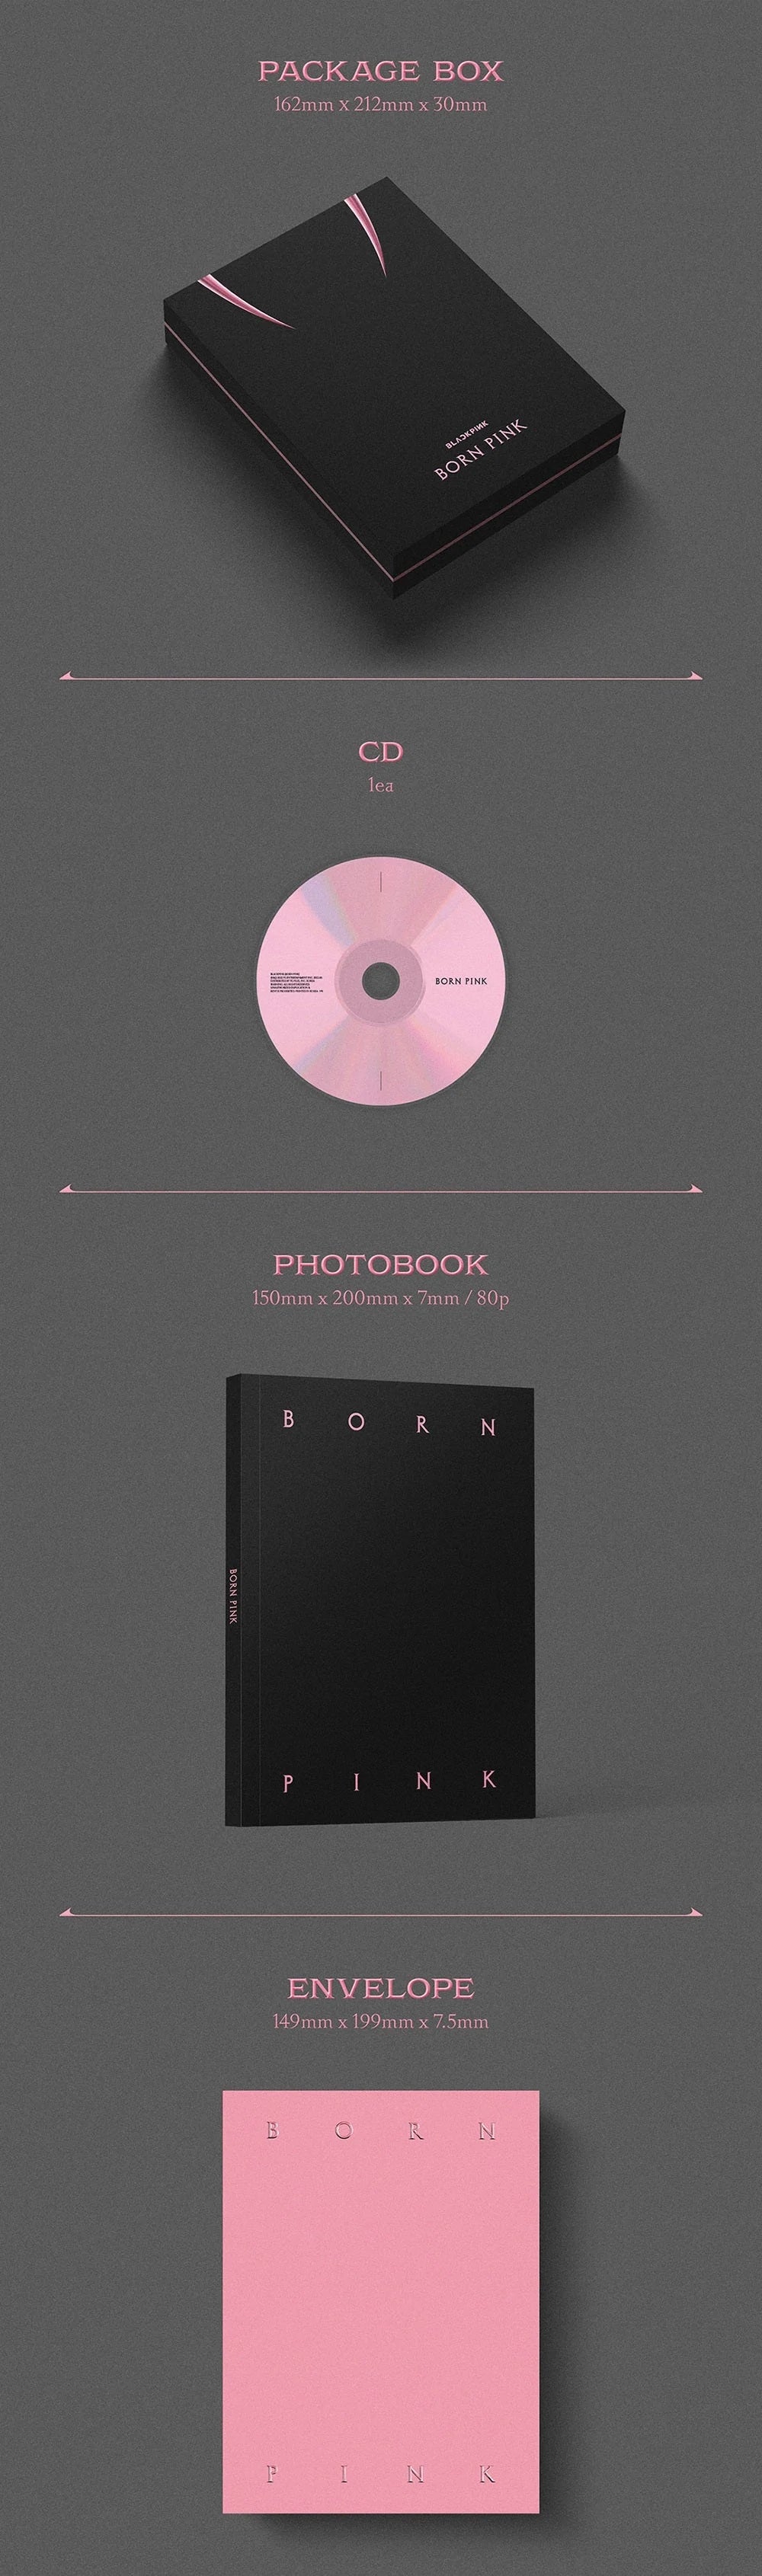 BLACKPINK 2nd Full Album - Born Pink (Box Set Ver) – Kpop Omo